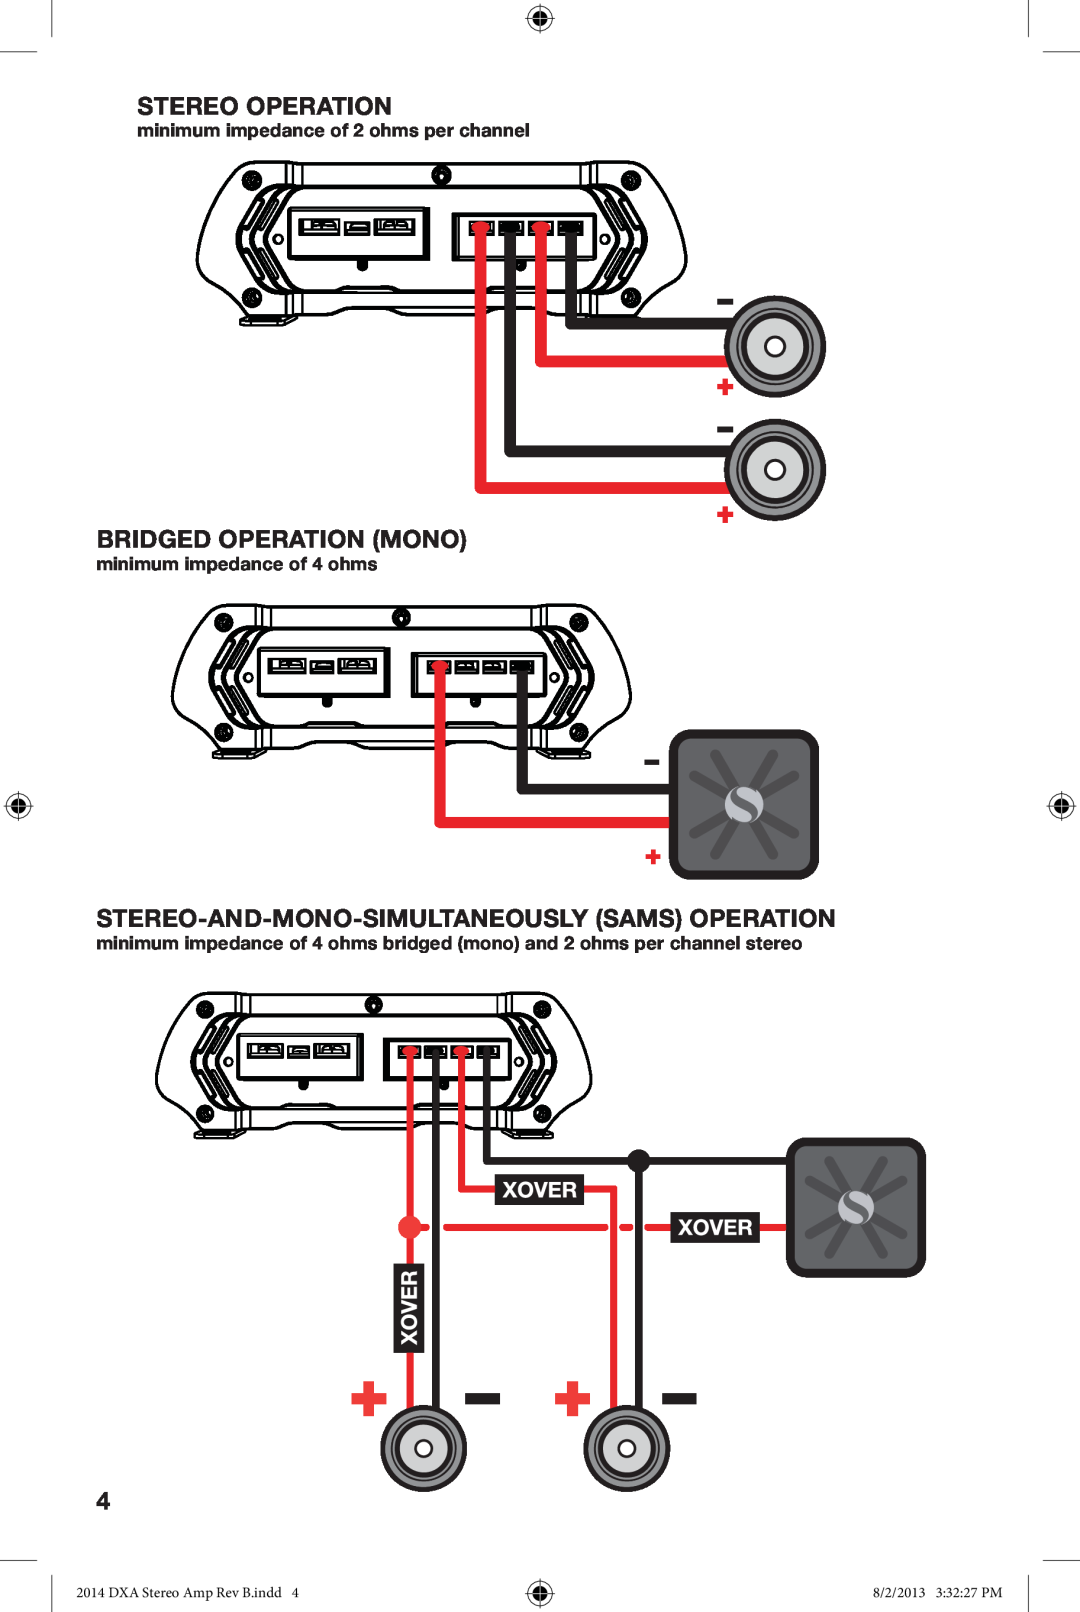 Kicker DXA125.2 owner manual Stereo Operation, Bridged Operation Mono, Stereo-And-Mono-Simultaneously Sams Operation 